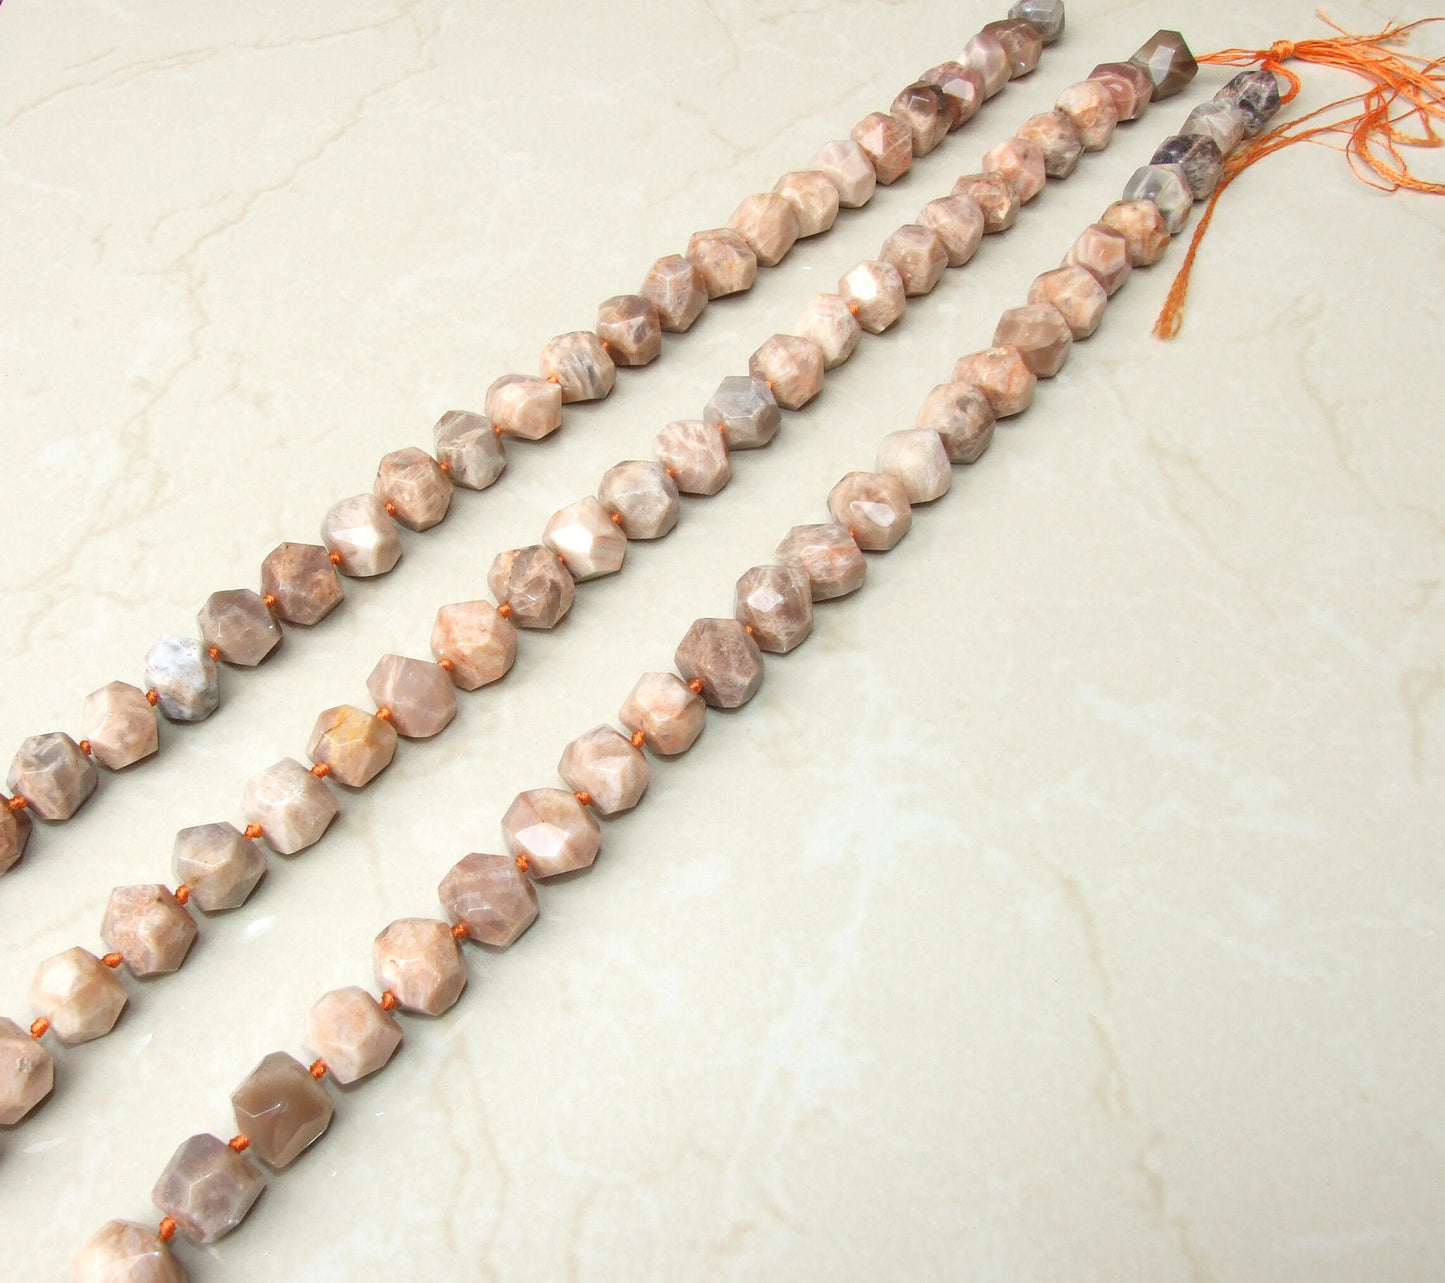 Sunstone Faceted Nugget - Gemstone Beads - Polished Sunstone Pendant - Sunstone Bead - Half Strand - Center Drilled - 13mm x 13mm x 20mm